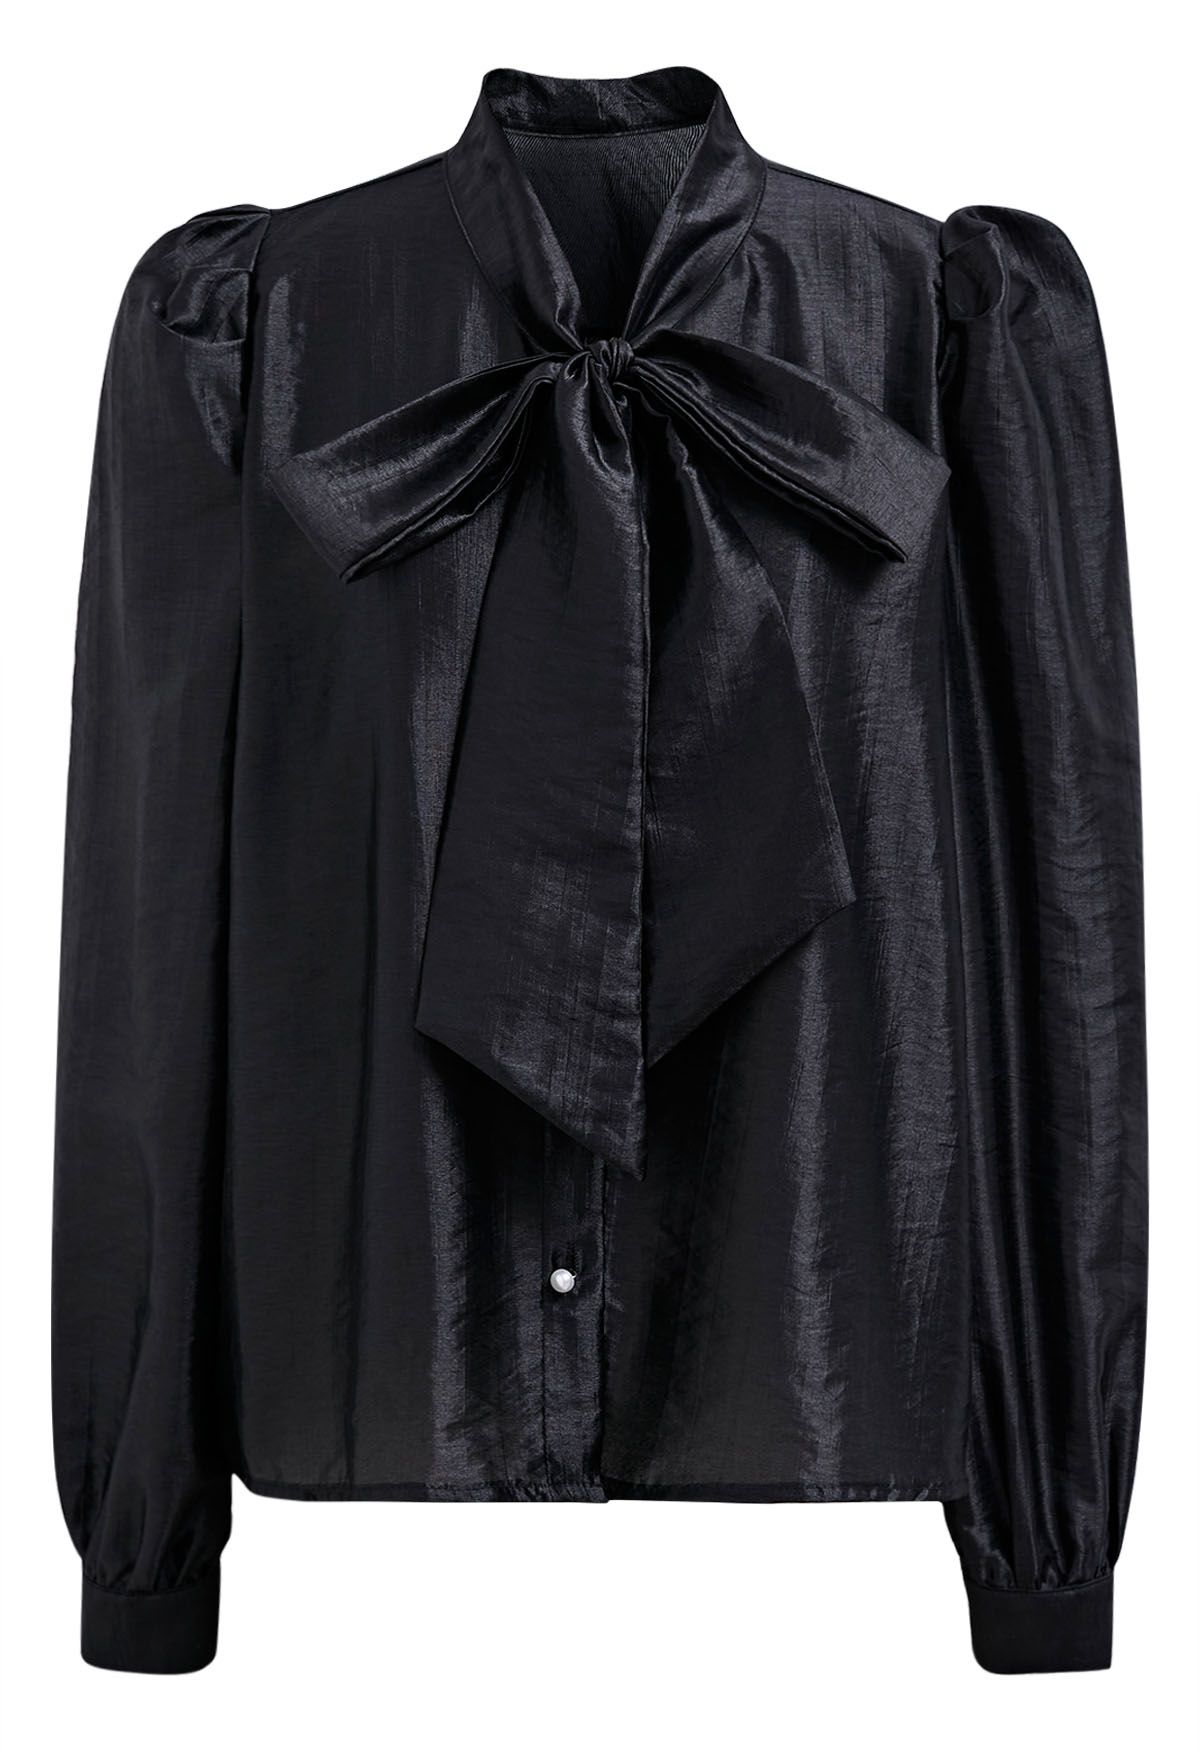 Texture Satin Self-Tie Bowknot Shirt in Black